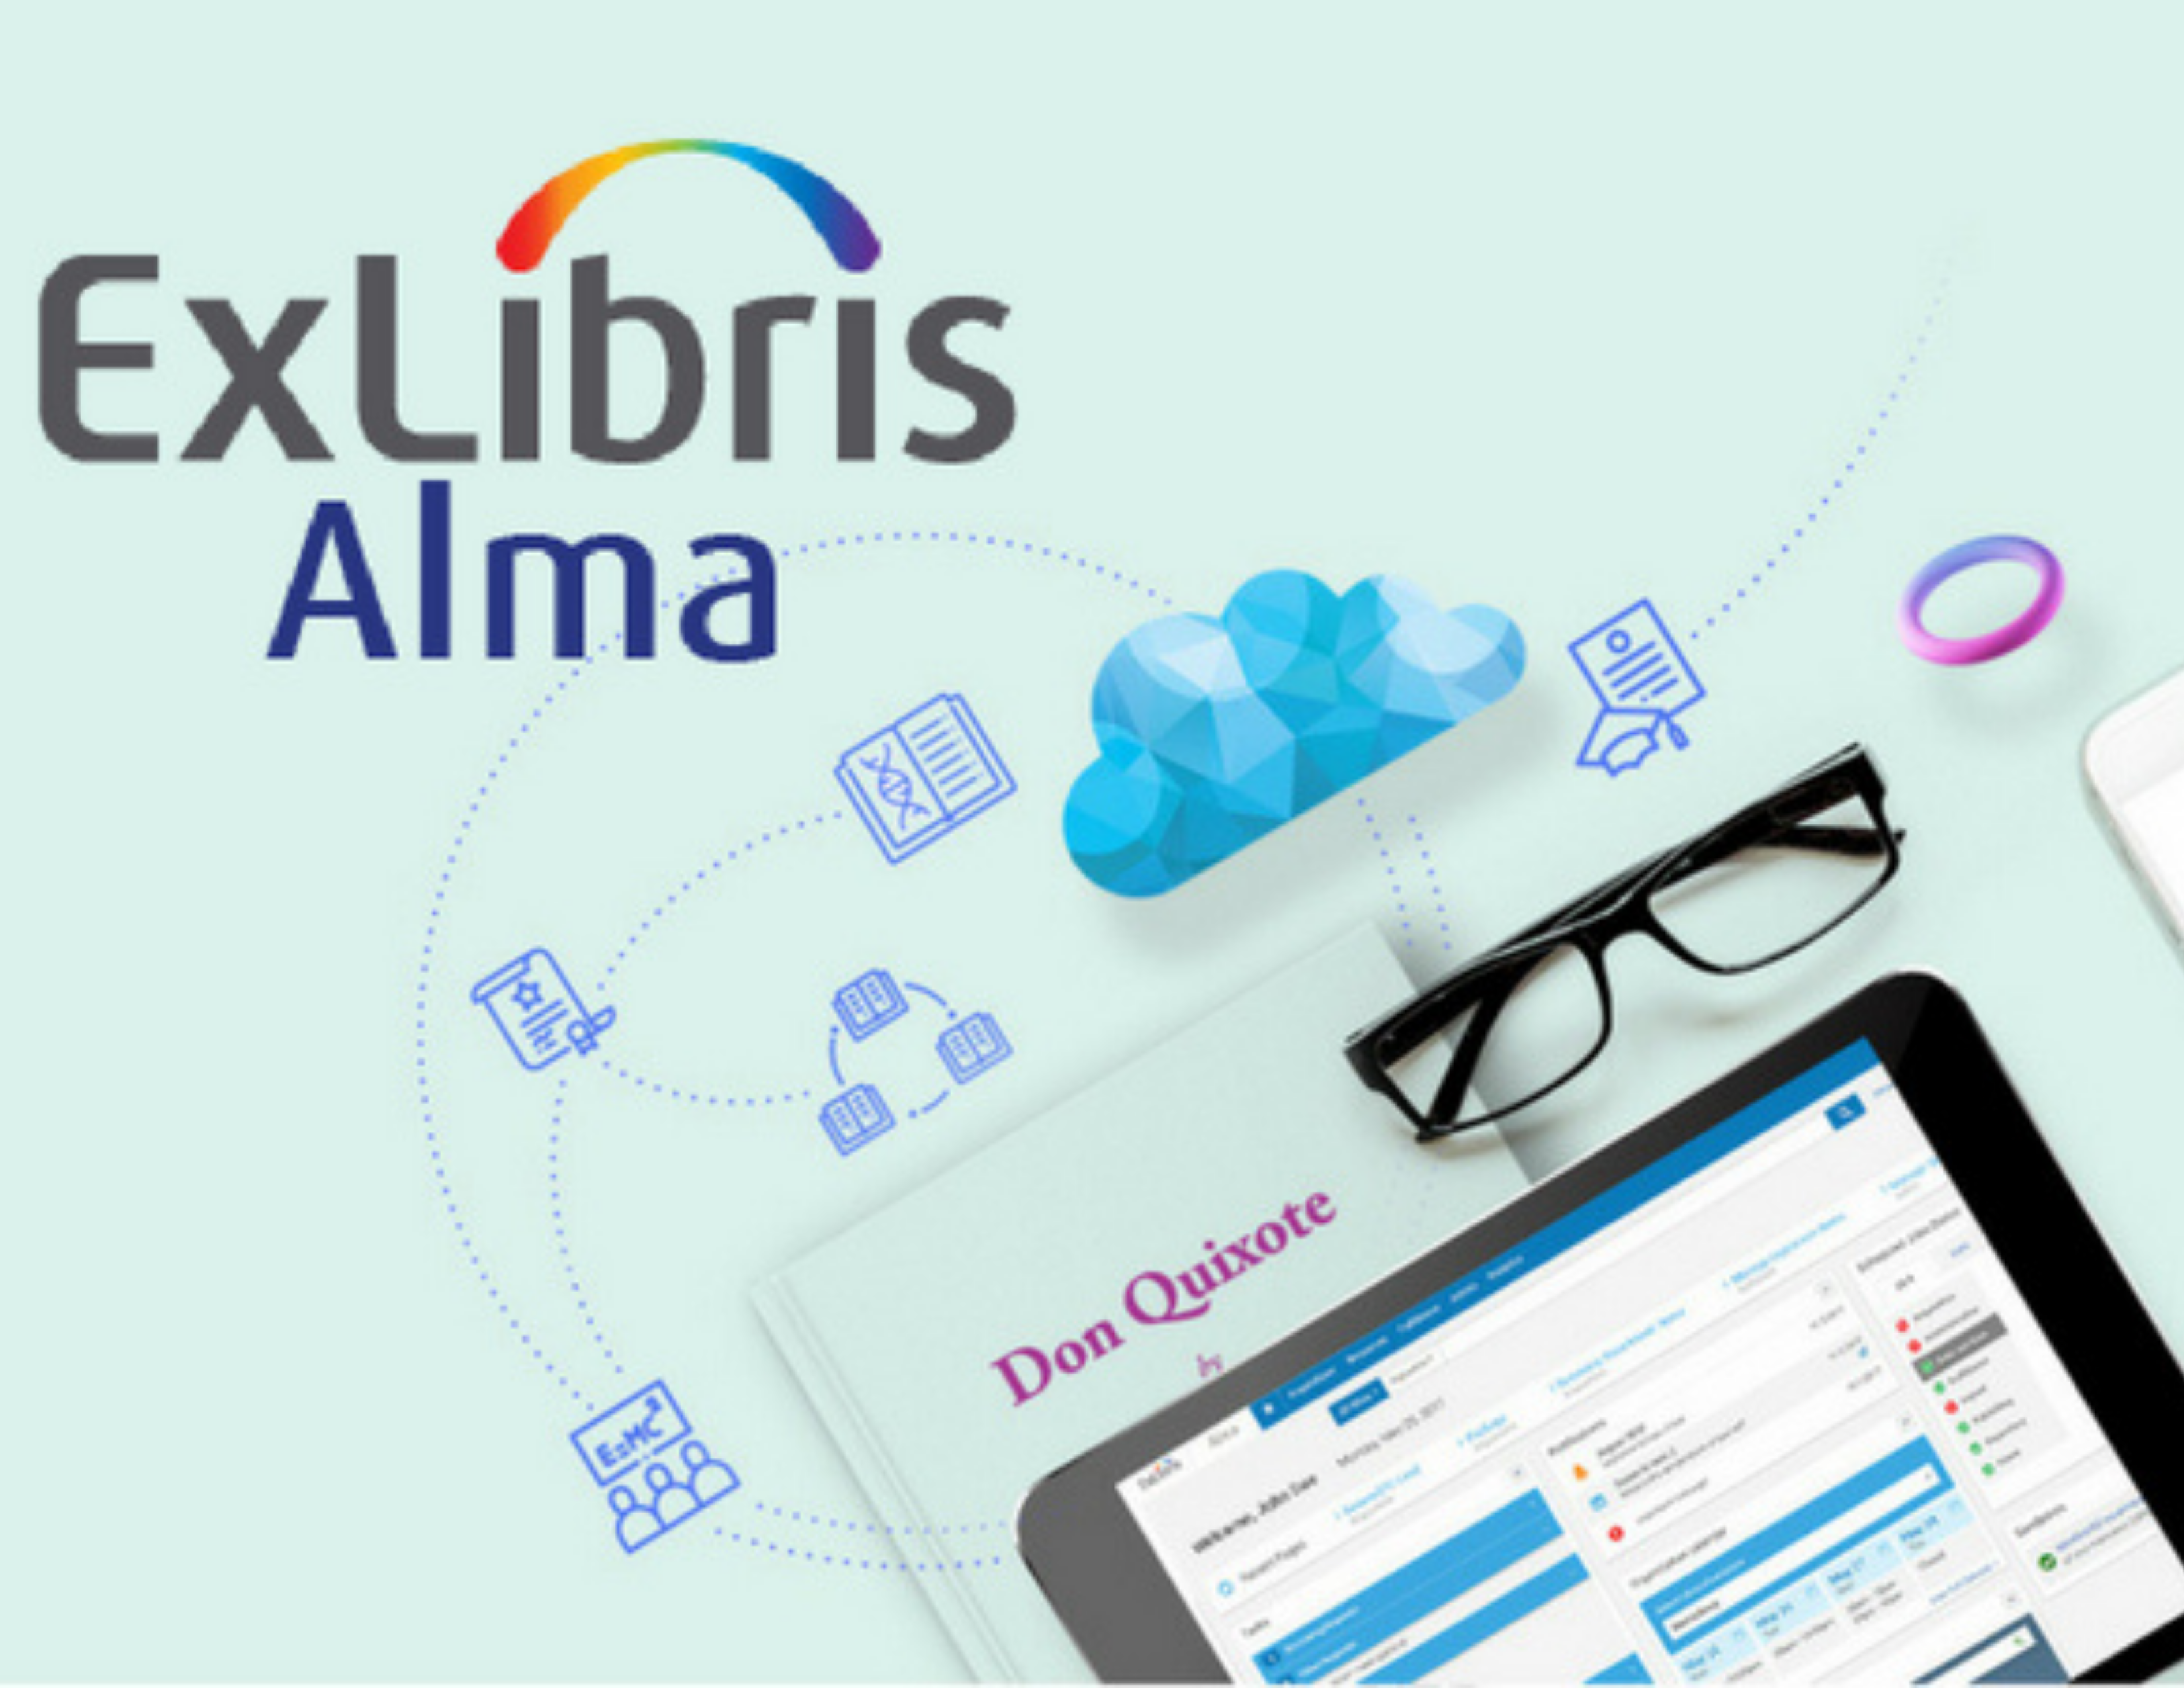 ExLibris Alma logo and image